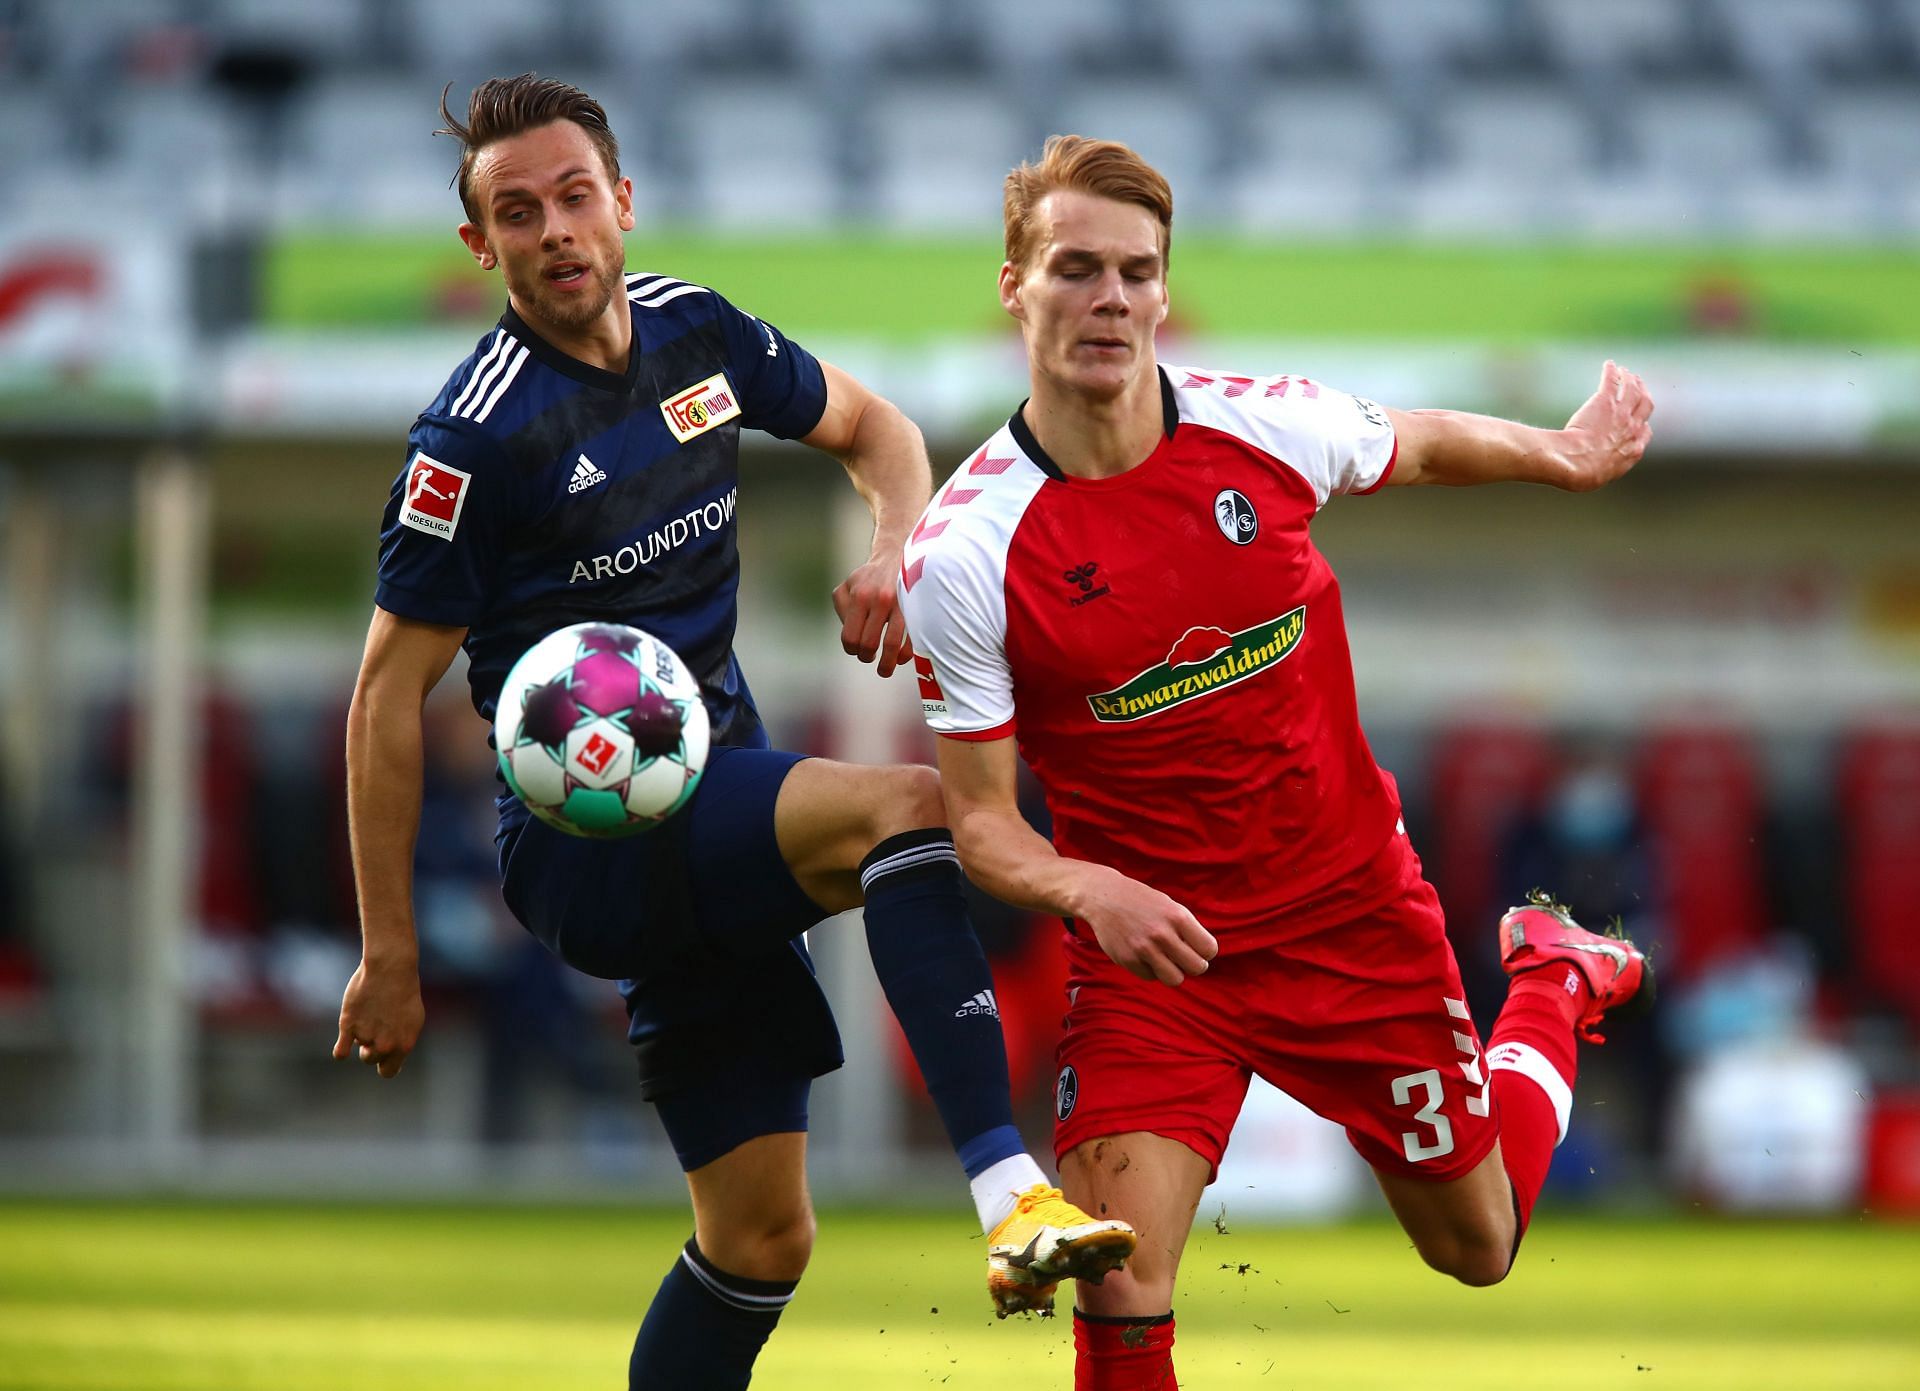 Freiburg face Union Berlin in their upcoming Bundesliga fixture on Saturday